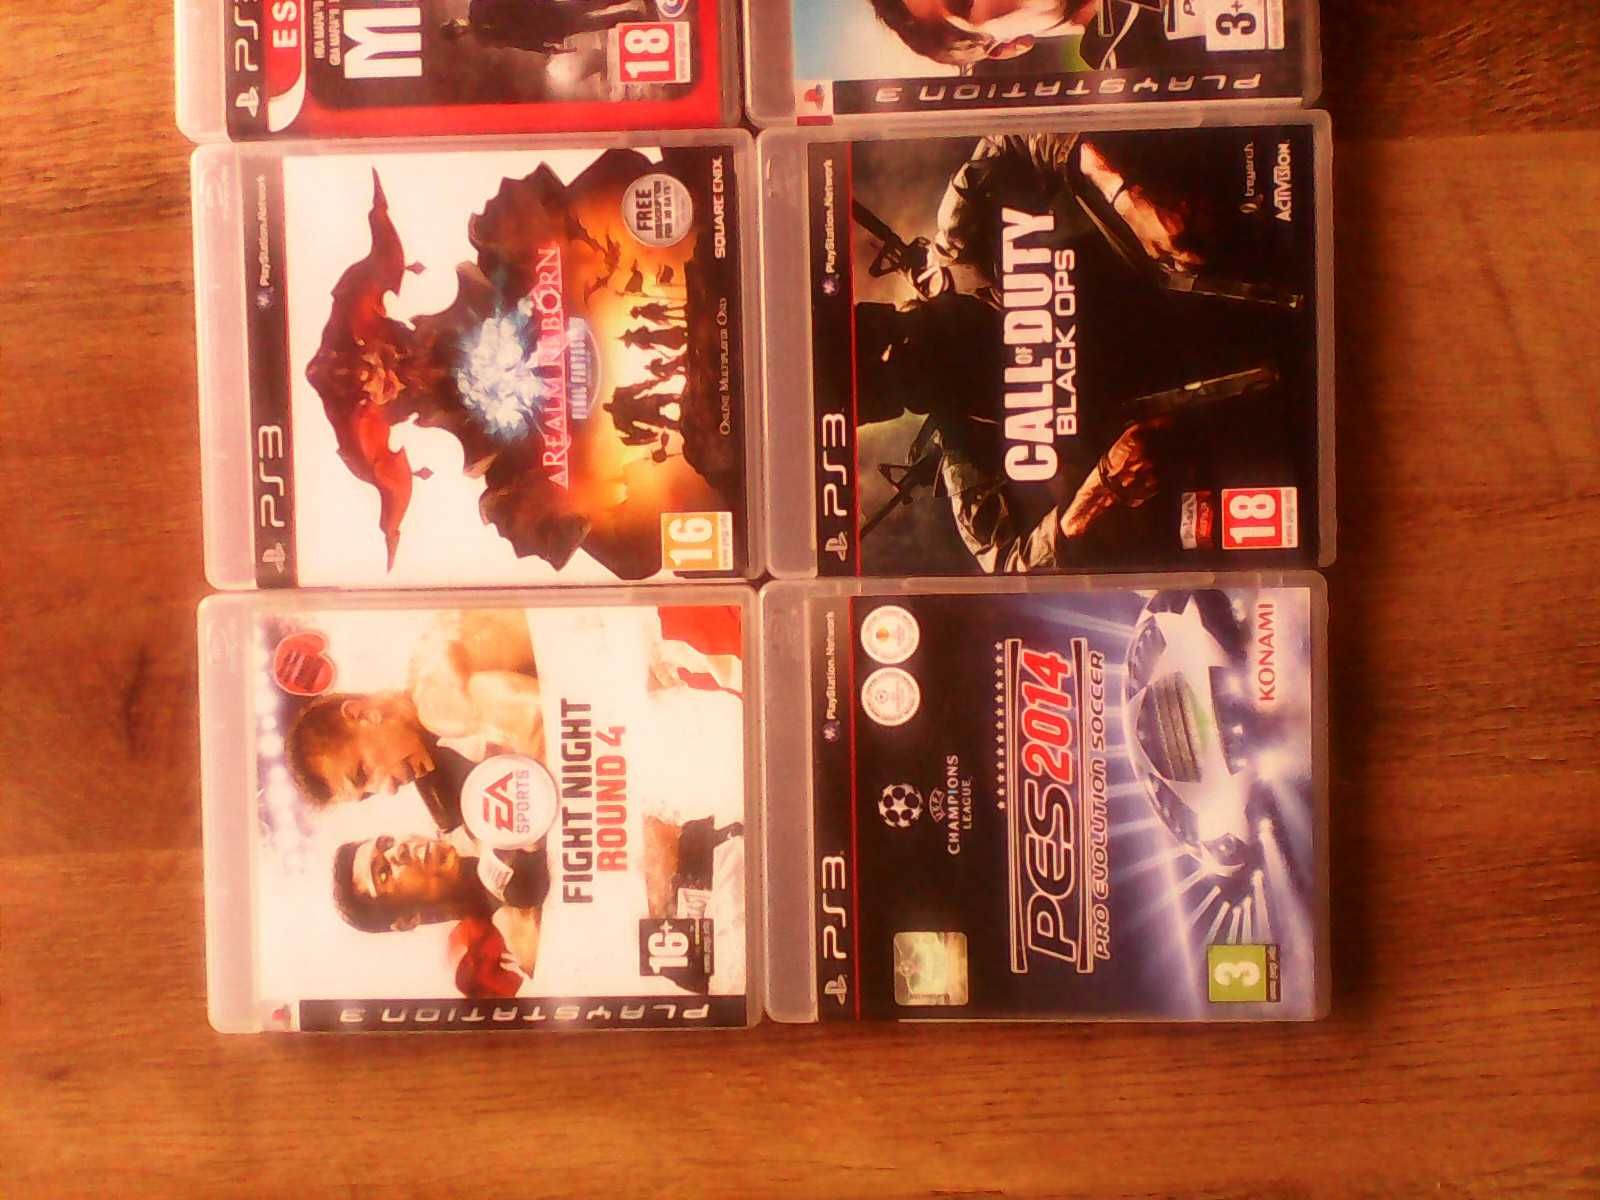 10 gier gry Ps3 Ps 3 Playstation 3 cena za całość komplet zestaw